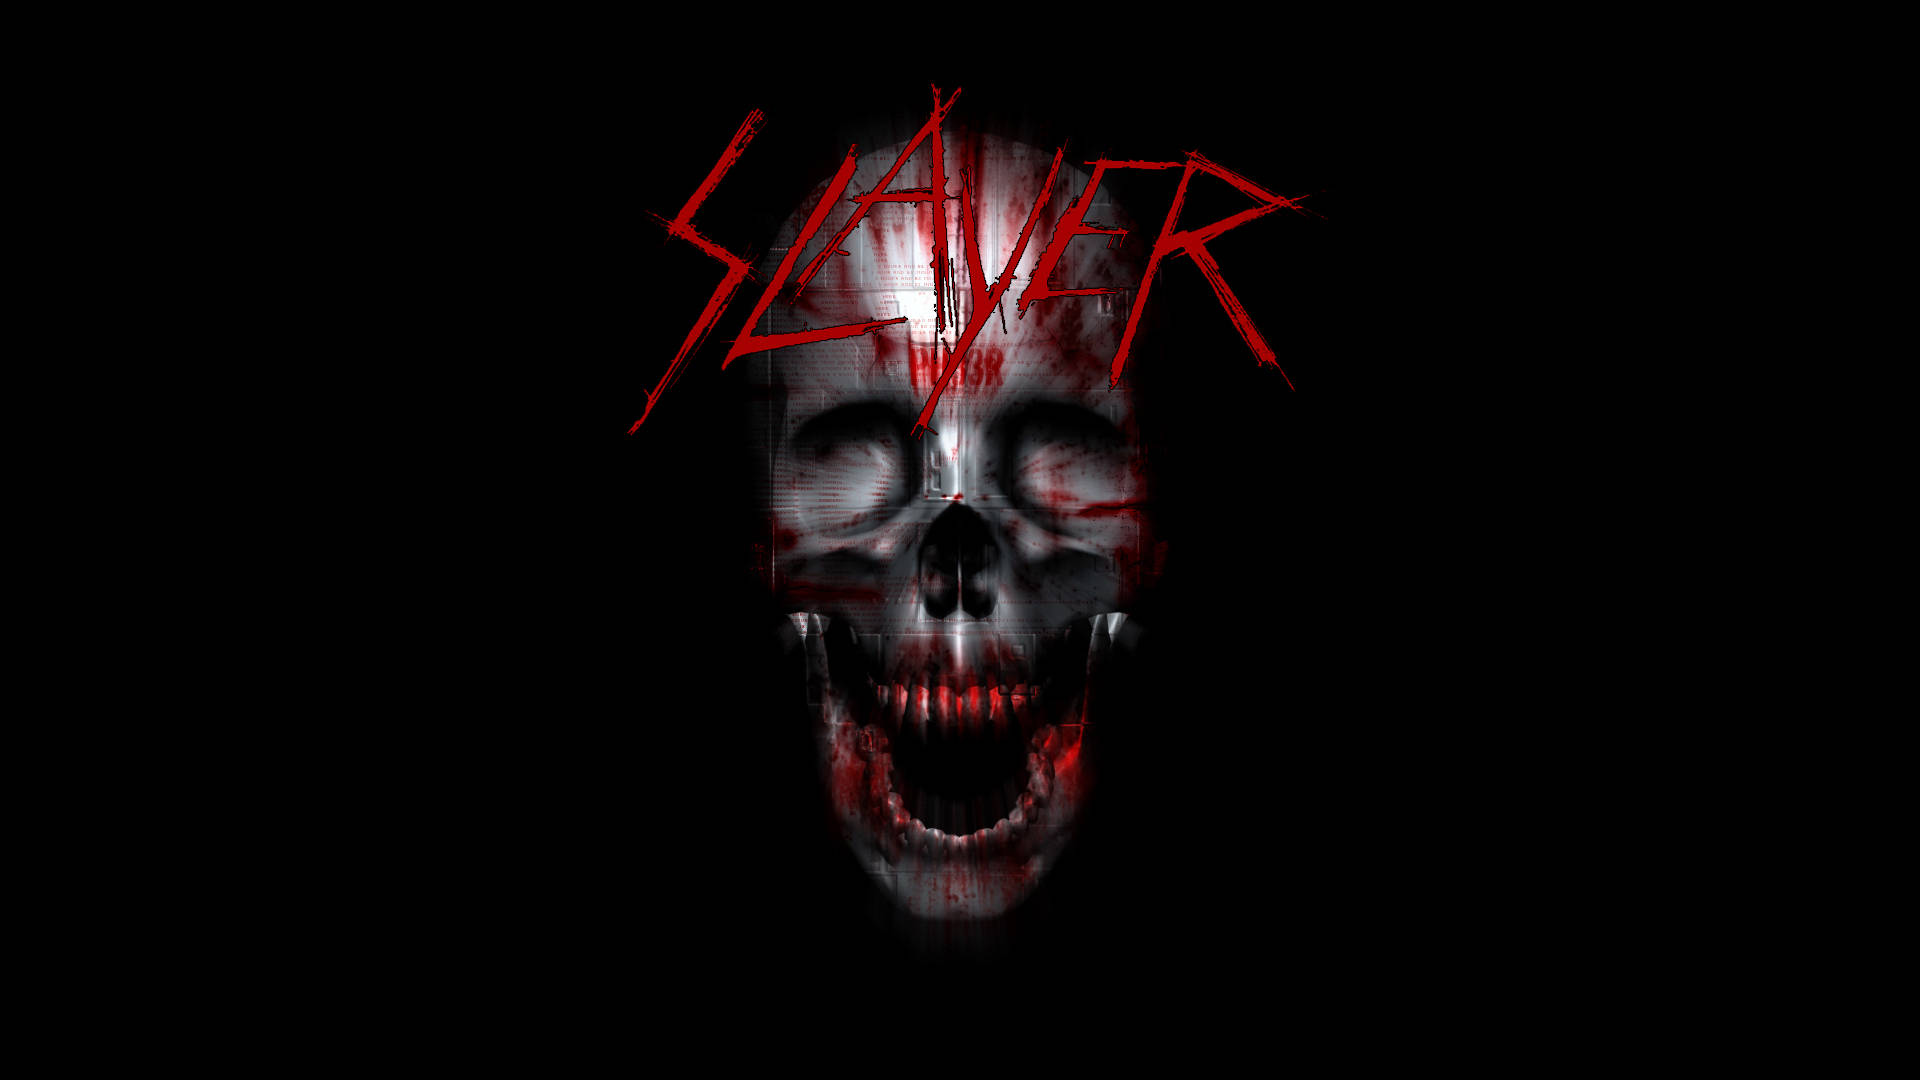 Creepy Face Slayer Band Wallpaper